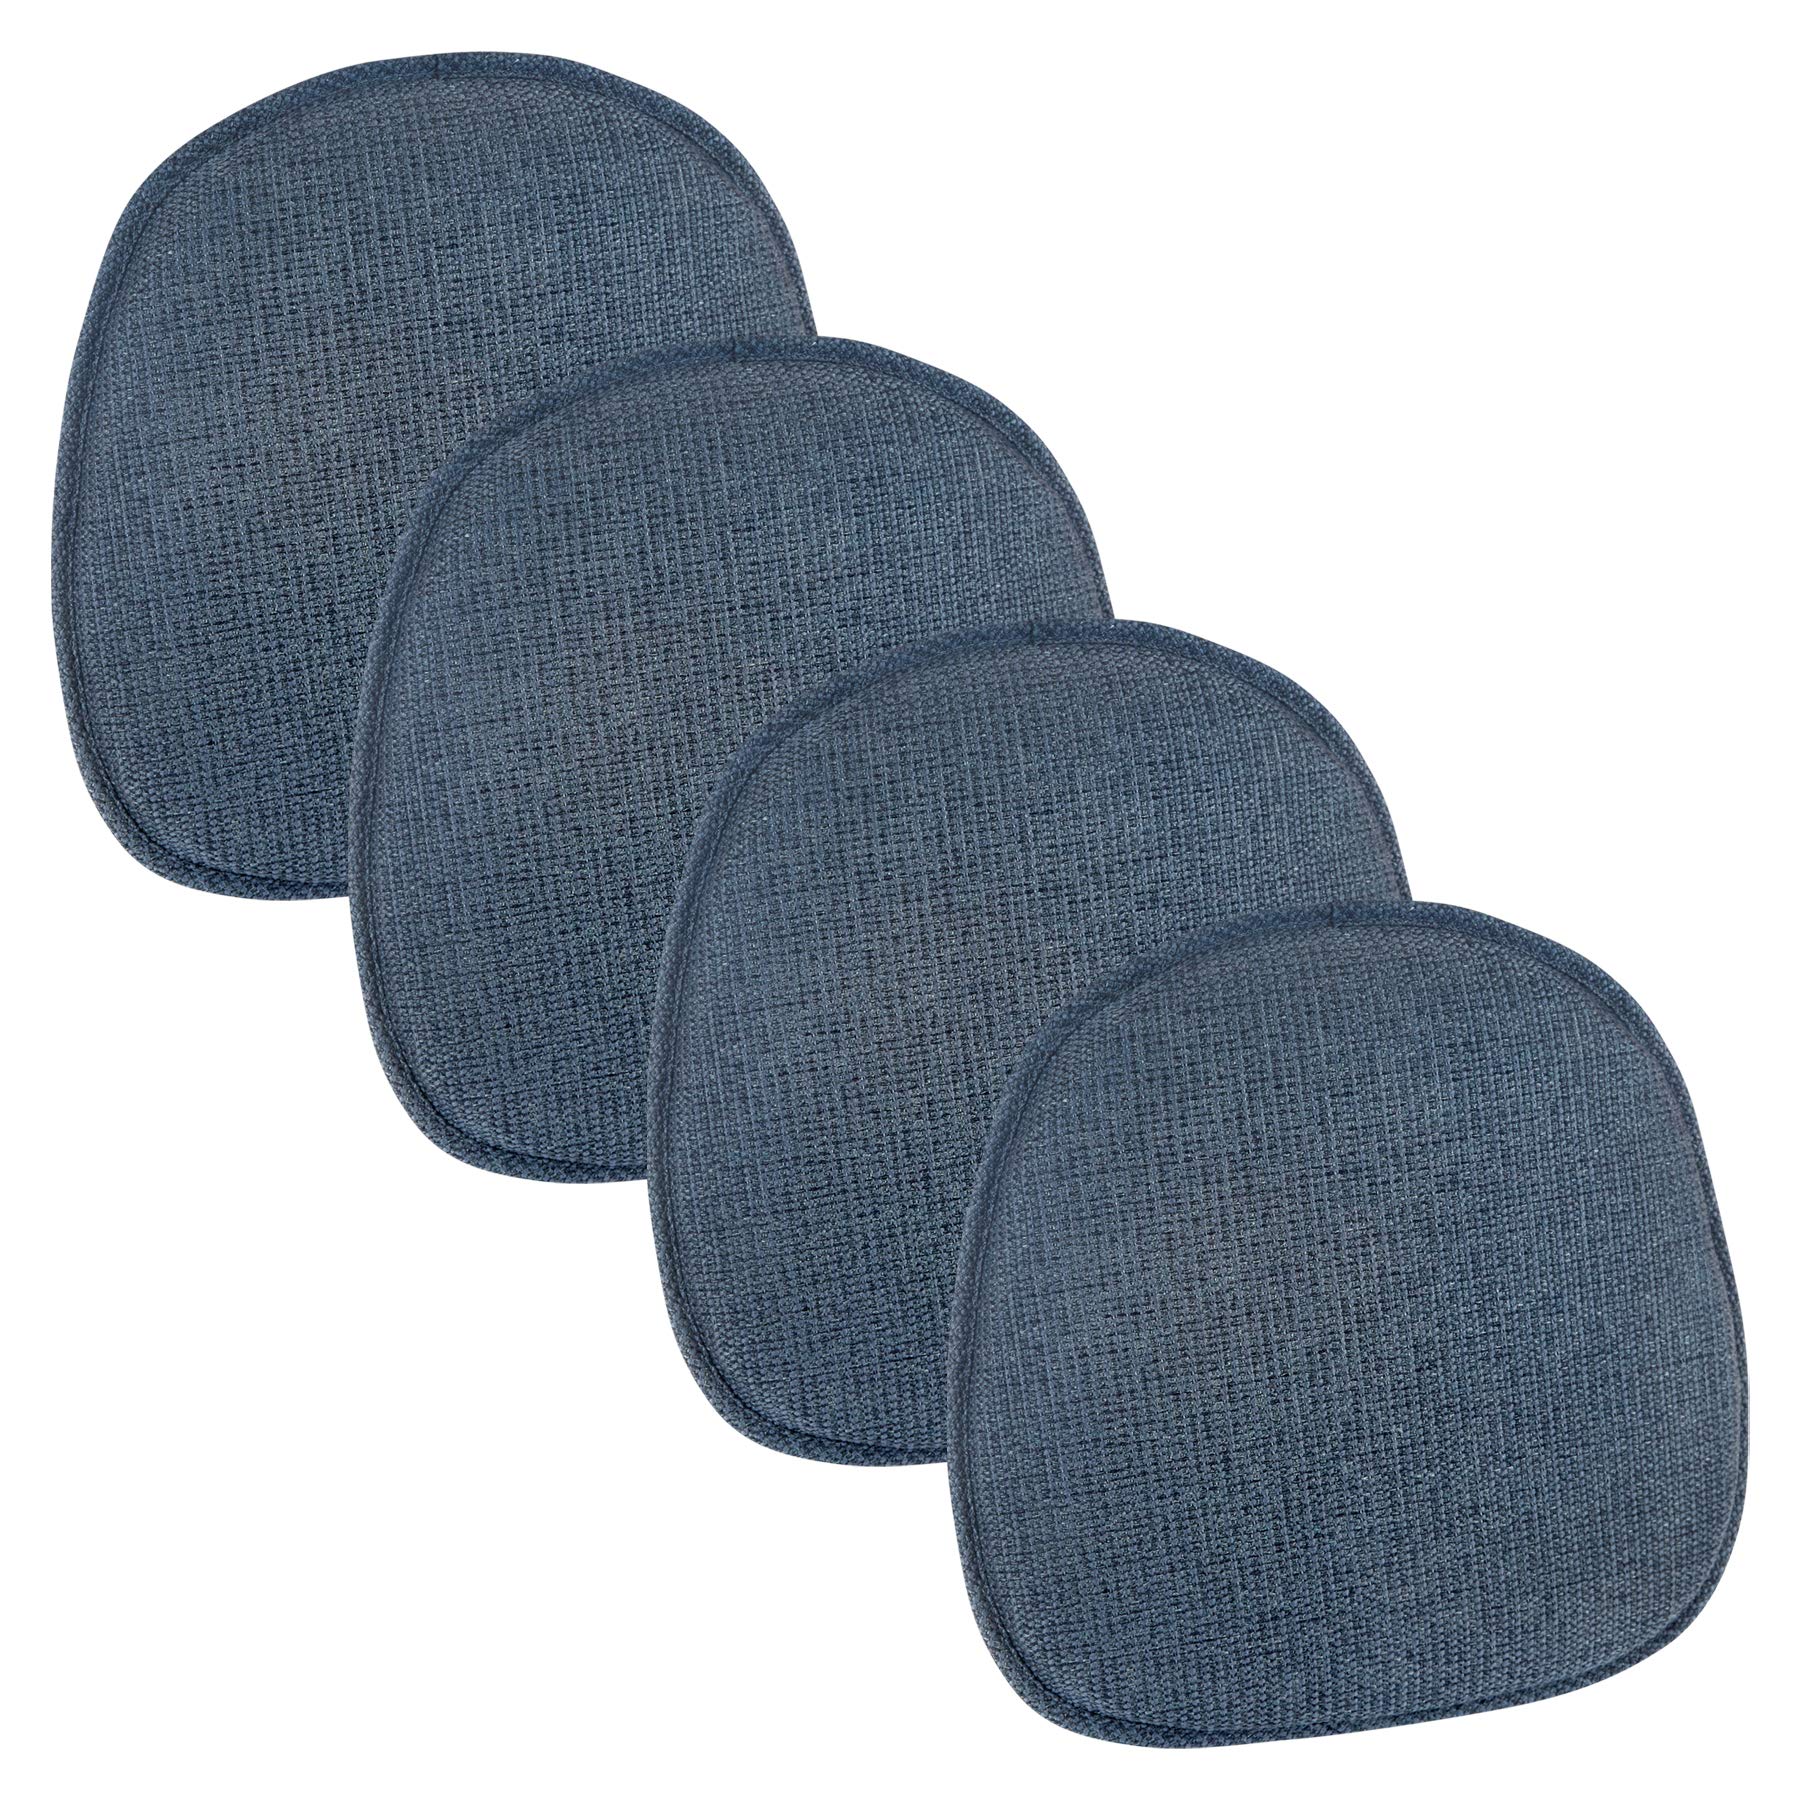 Klear Vu Gripper Non-Slip Tonic Bistro/Mid Century Chair Cushions, 4 Pack, Blue 4 Count